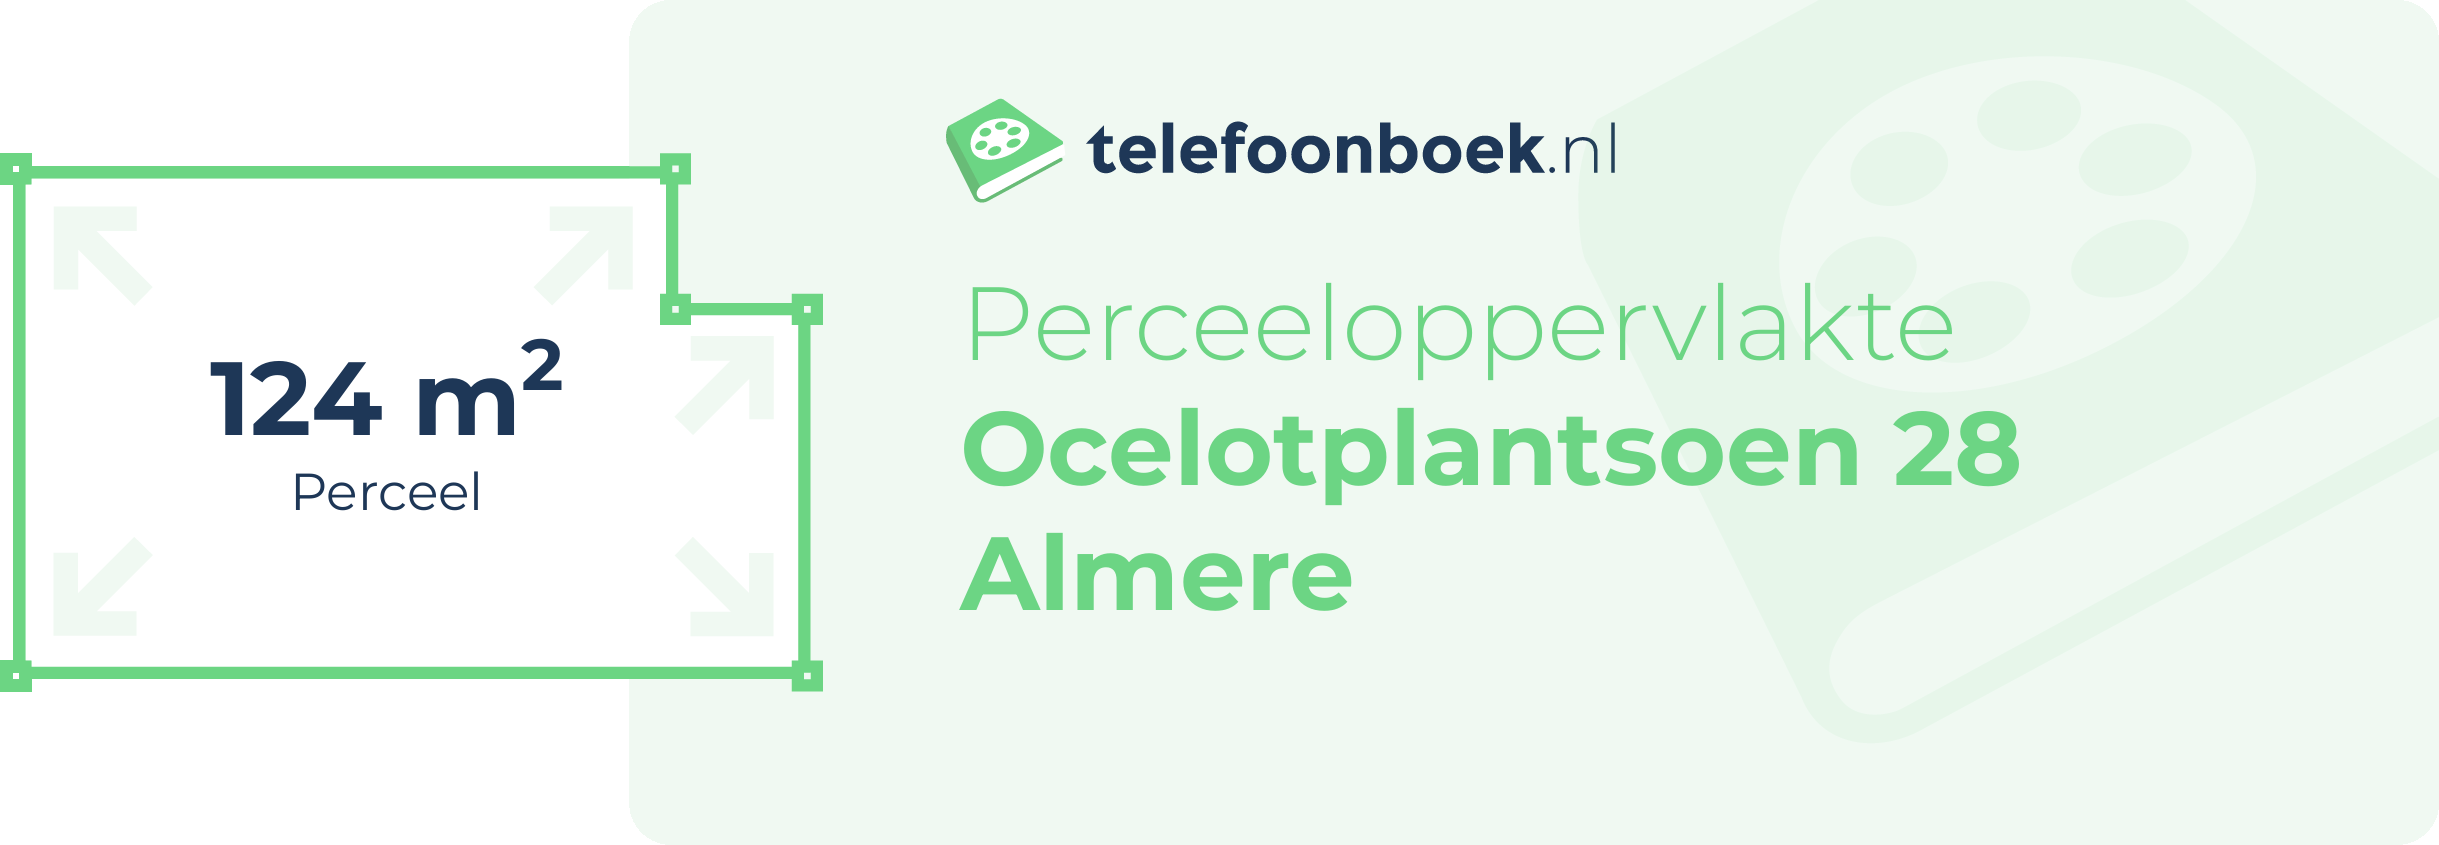 Perceeloppervlakte Ocelotplantsoen 28 Almere